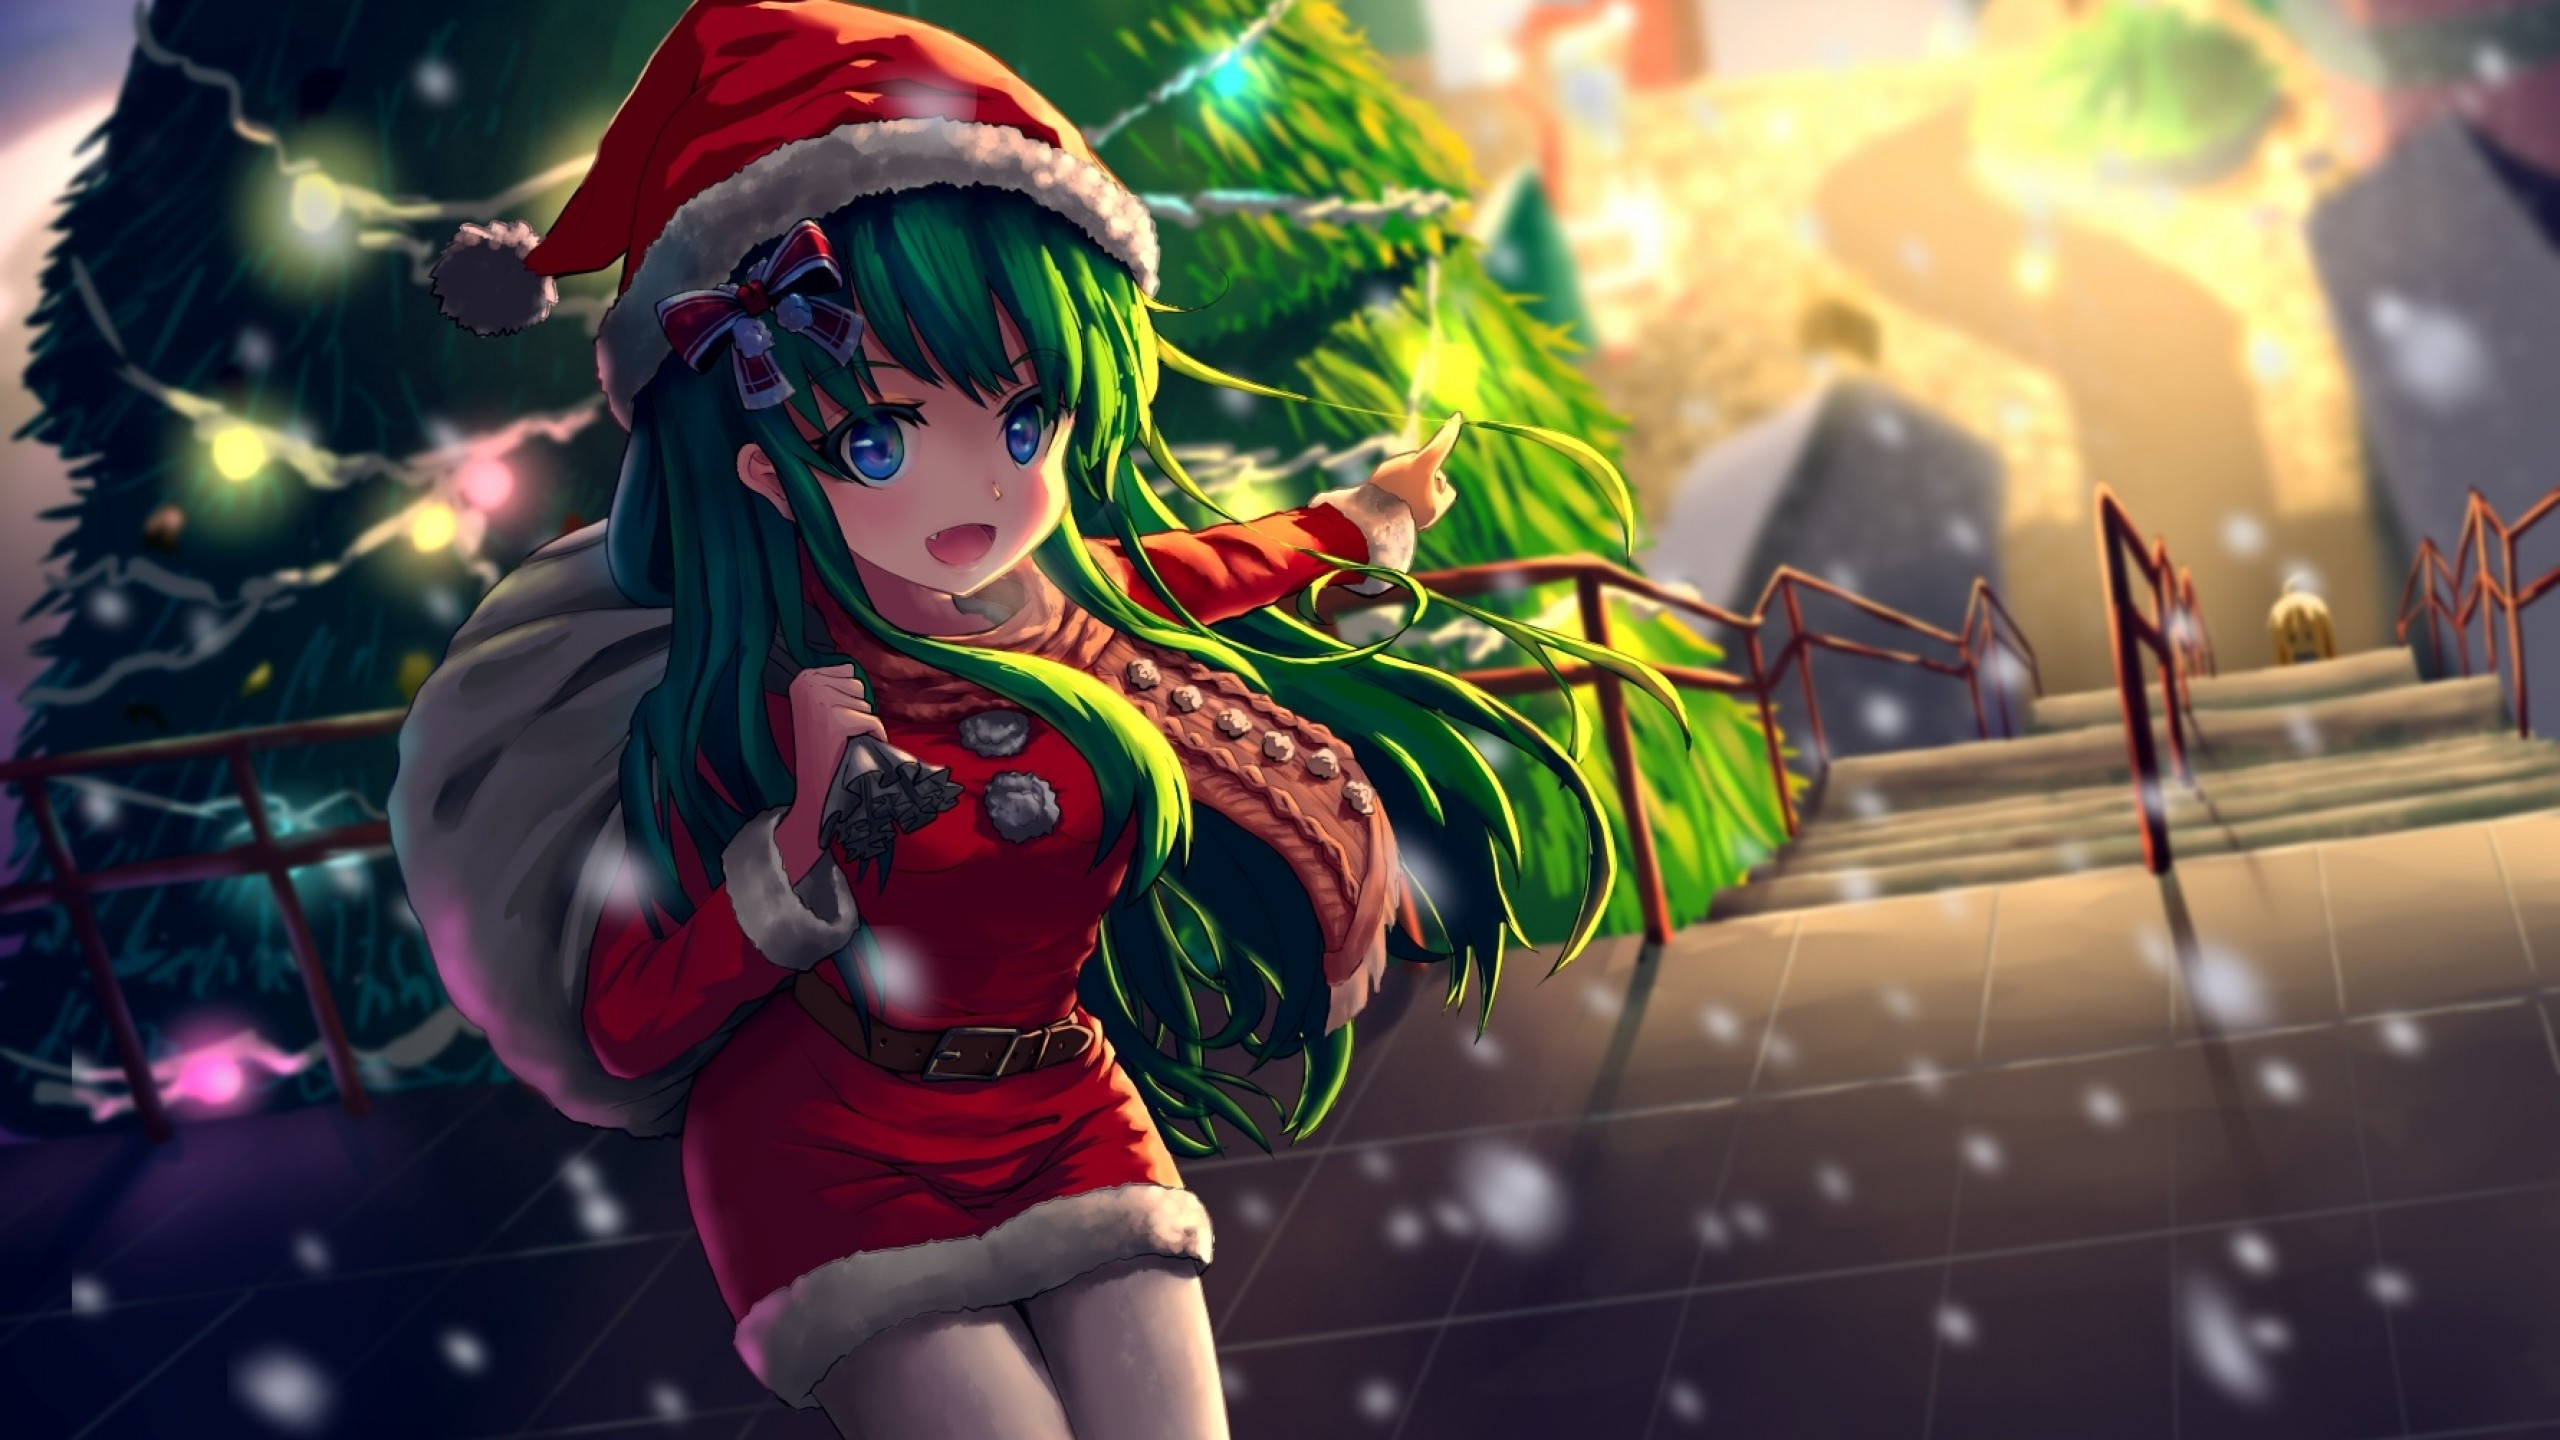 Download 2560x1440 Anime Girl, Christmas, Santa Costume, Fang, Smiling, Snow Wallpaper for iMac 27 inch